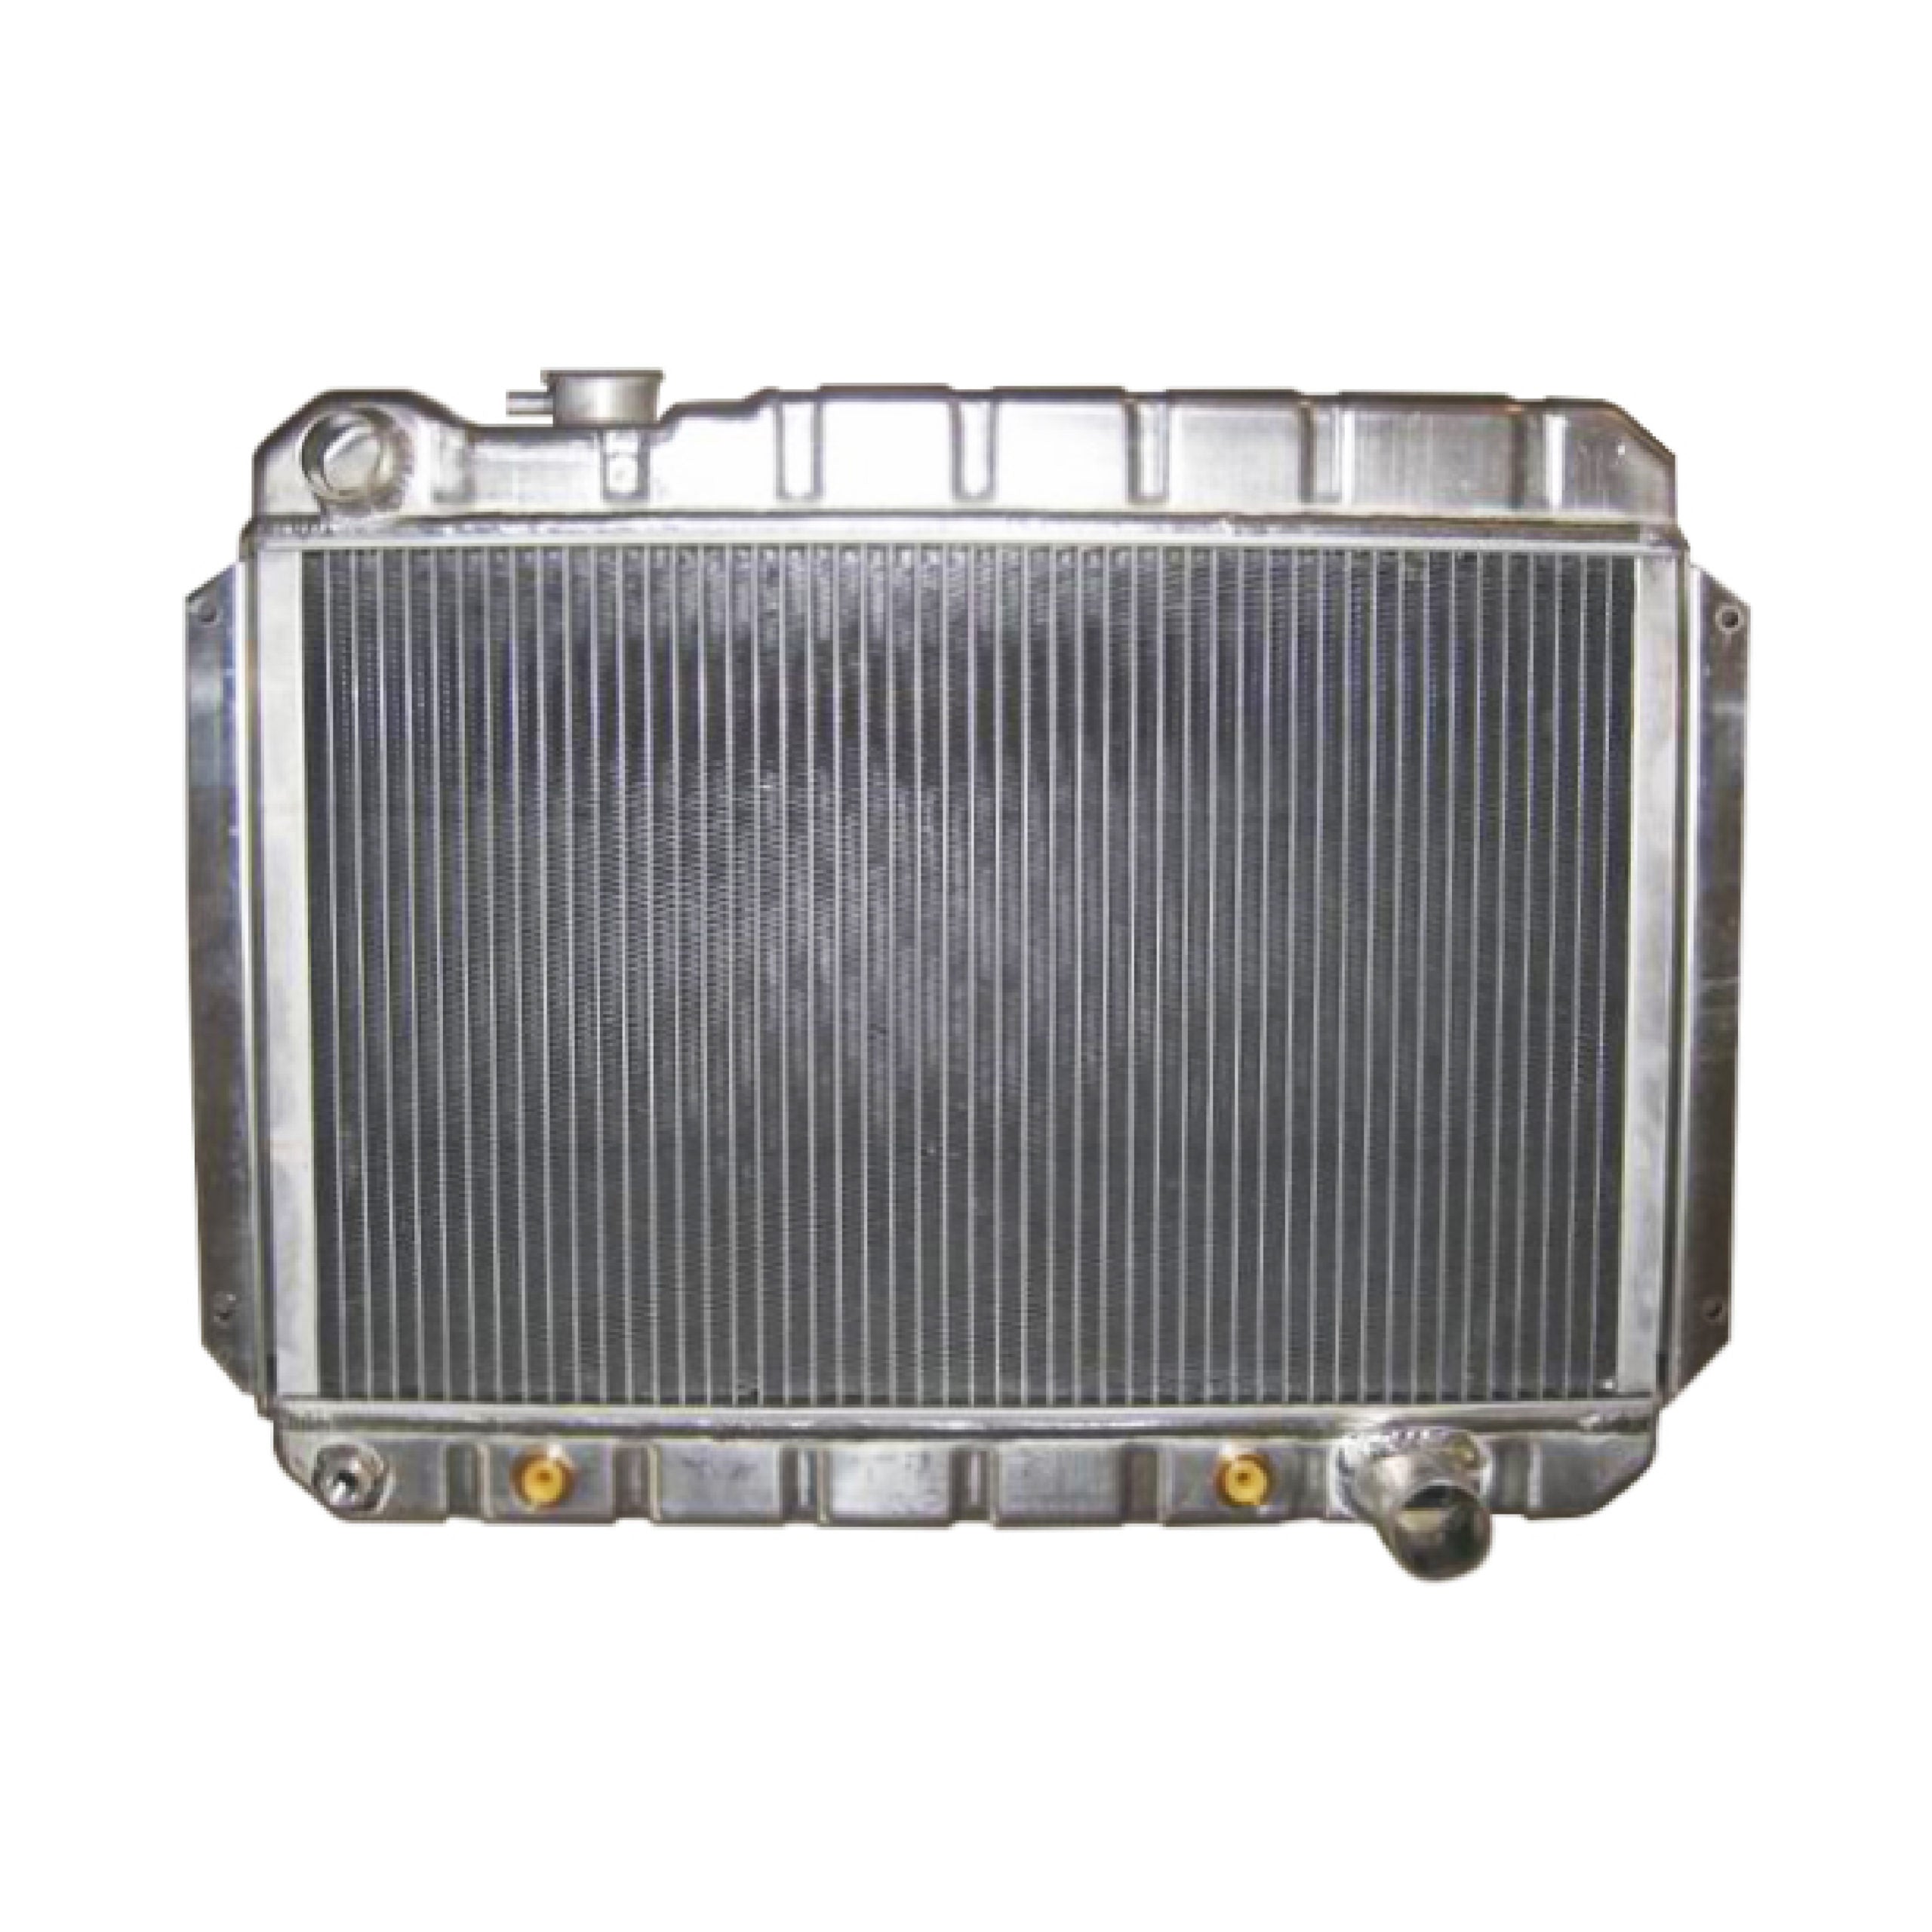 Racing Power Company R1038 66-67 chevelle aluminum radiator